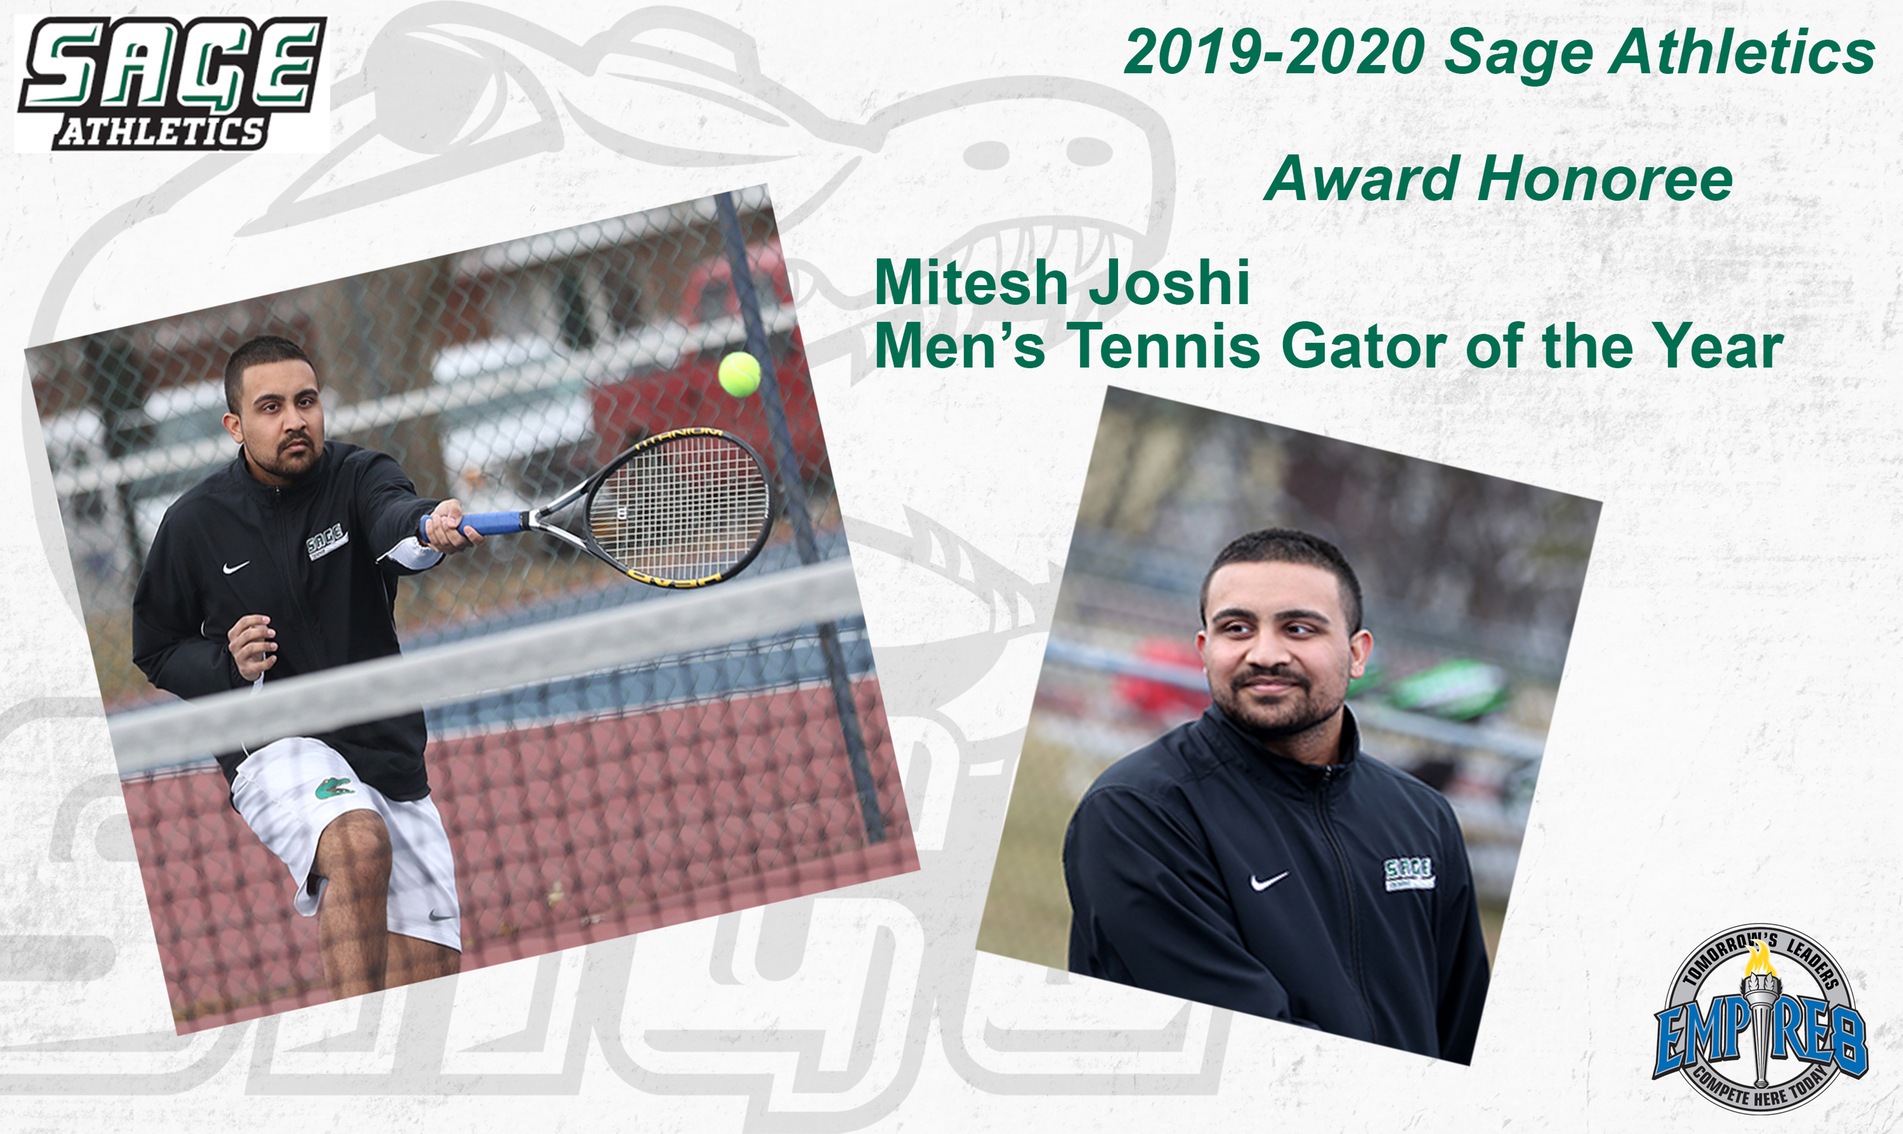 Mitesh Joshi honored as Men's Tennis Gator of the Year